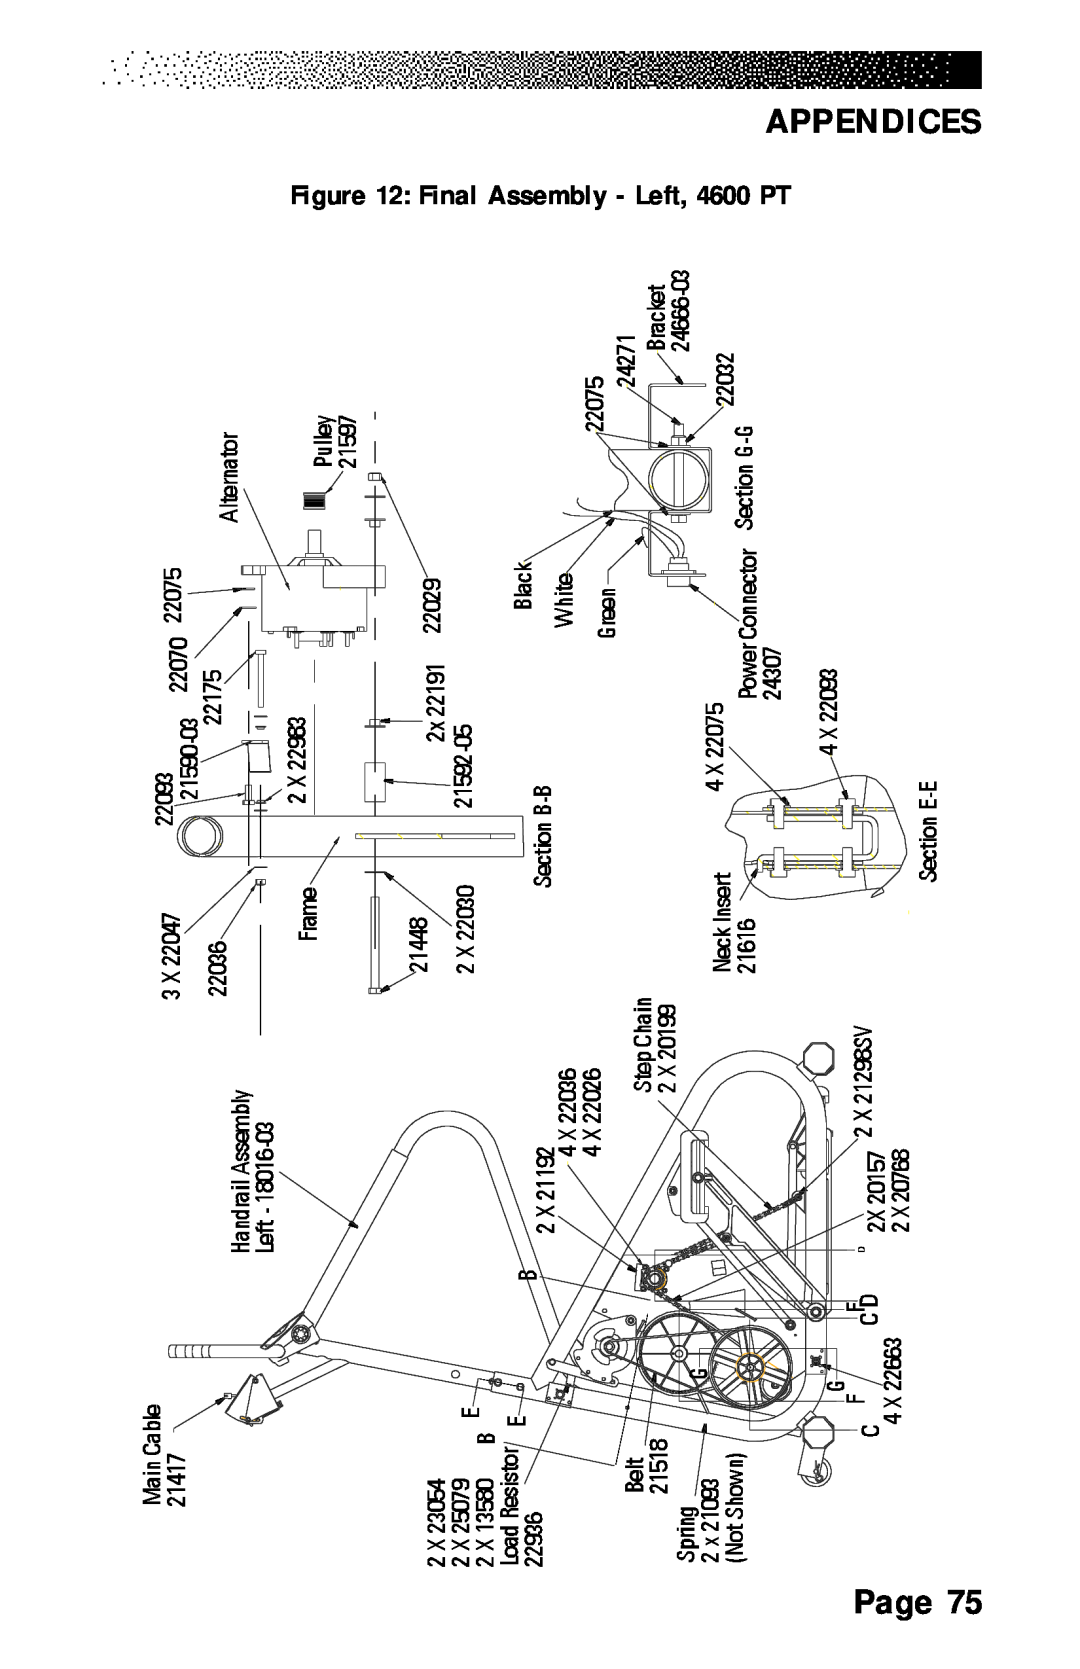 Stairmaster 4600 PT/CL, 4200 PT, 4400 PT/CL manual Final Assembly - Left, 4600 PT, Appendices, Page 